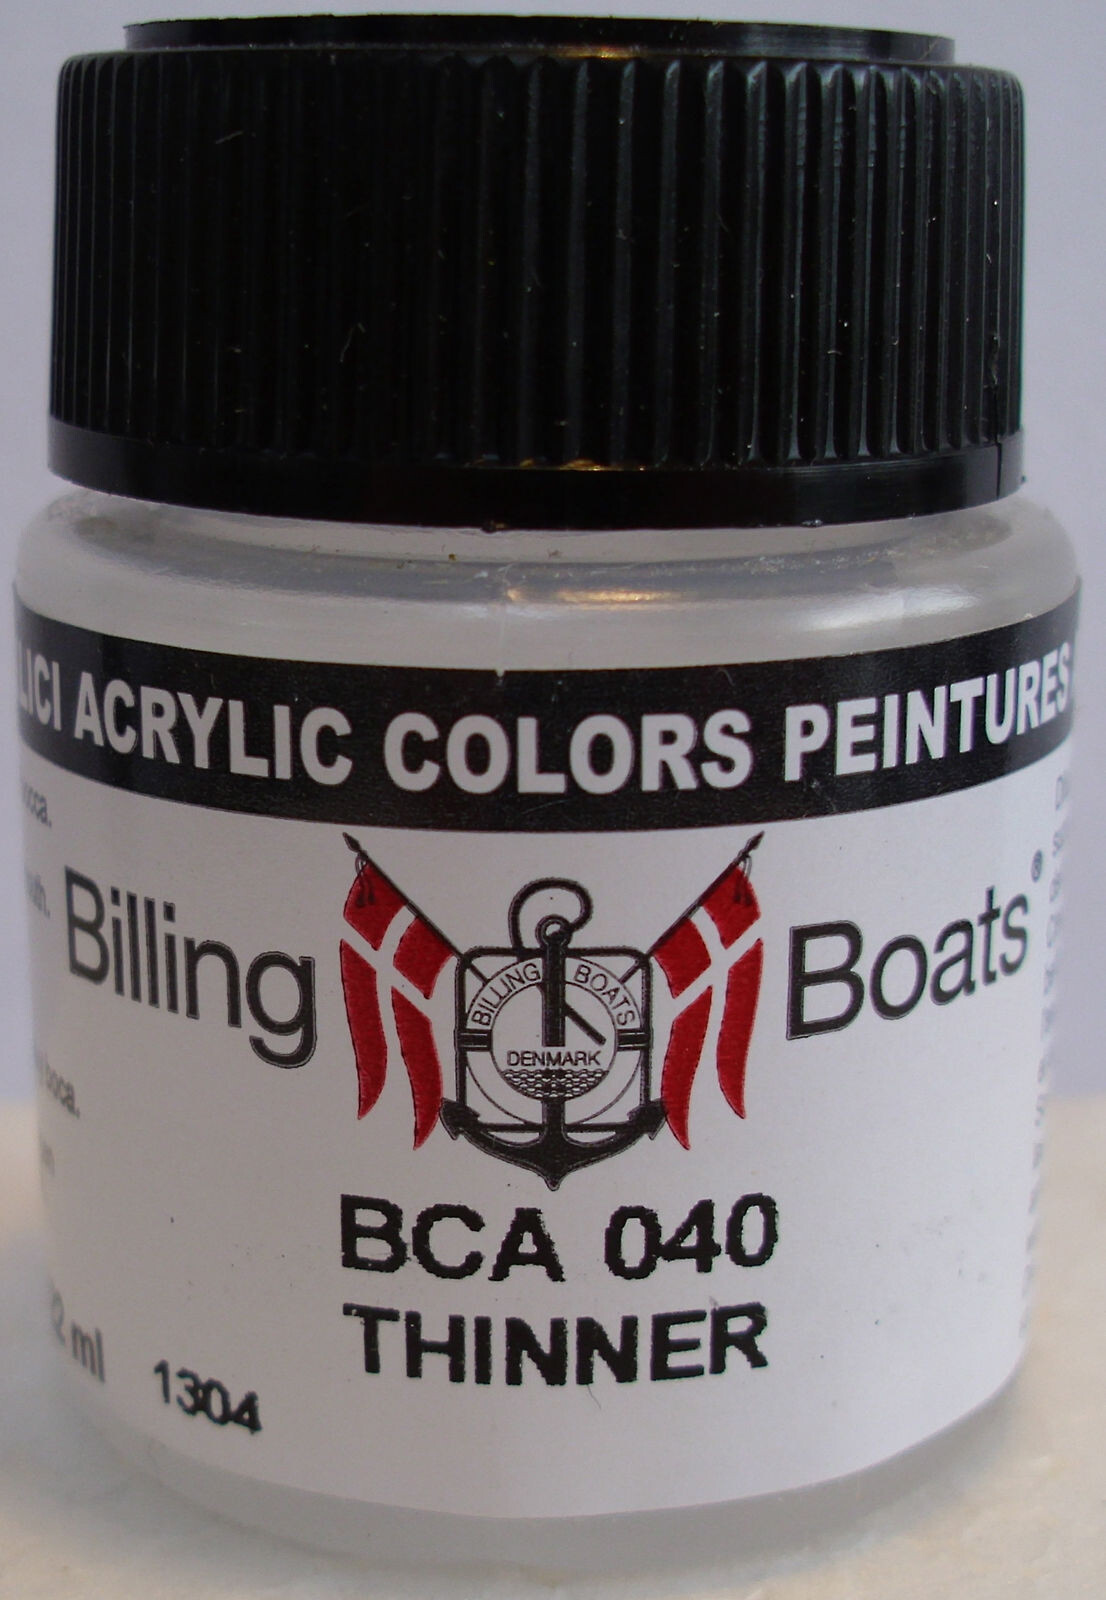 Billing Boats Maling - Thinner 22 Ml - Bca040